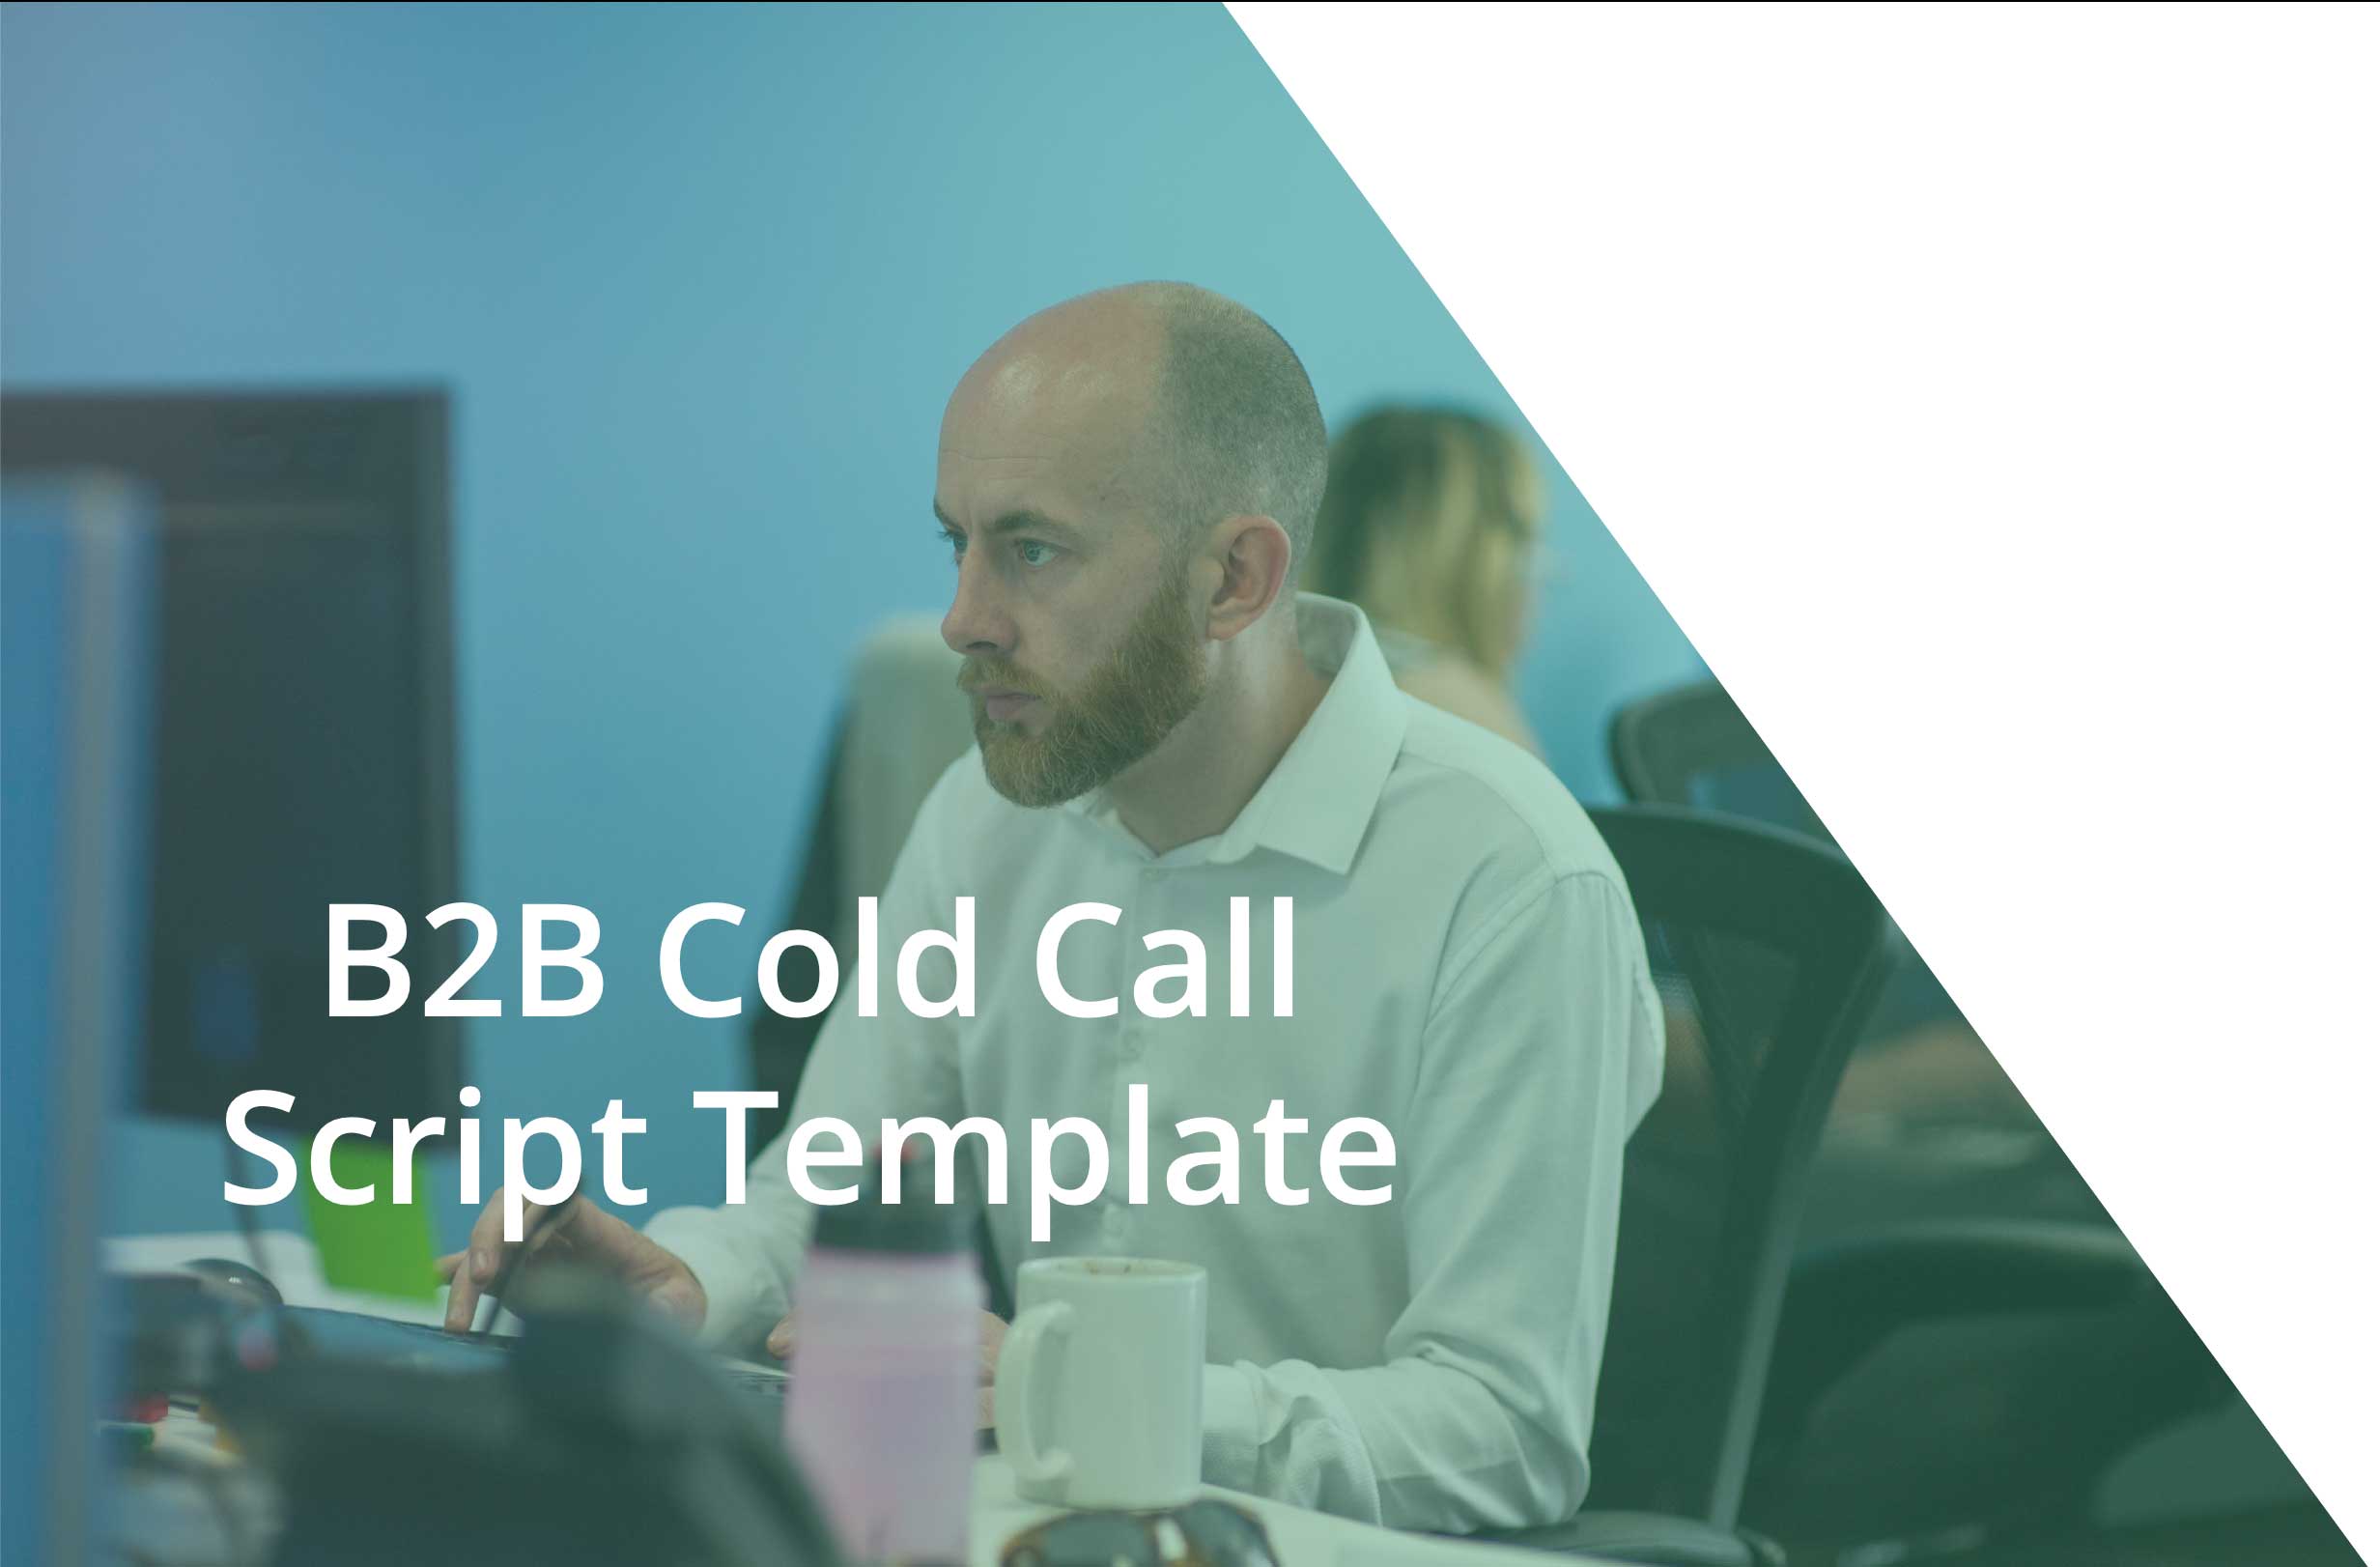 B2B Cold Call Guide & Script Template